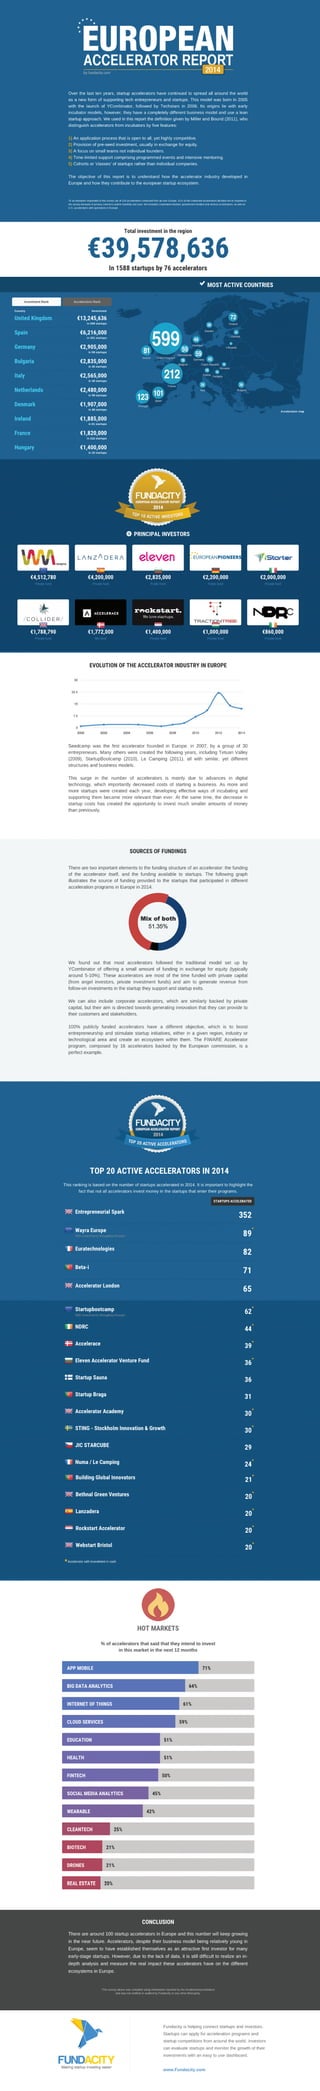 European accelerator report 2014 par Fundacity